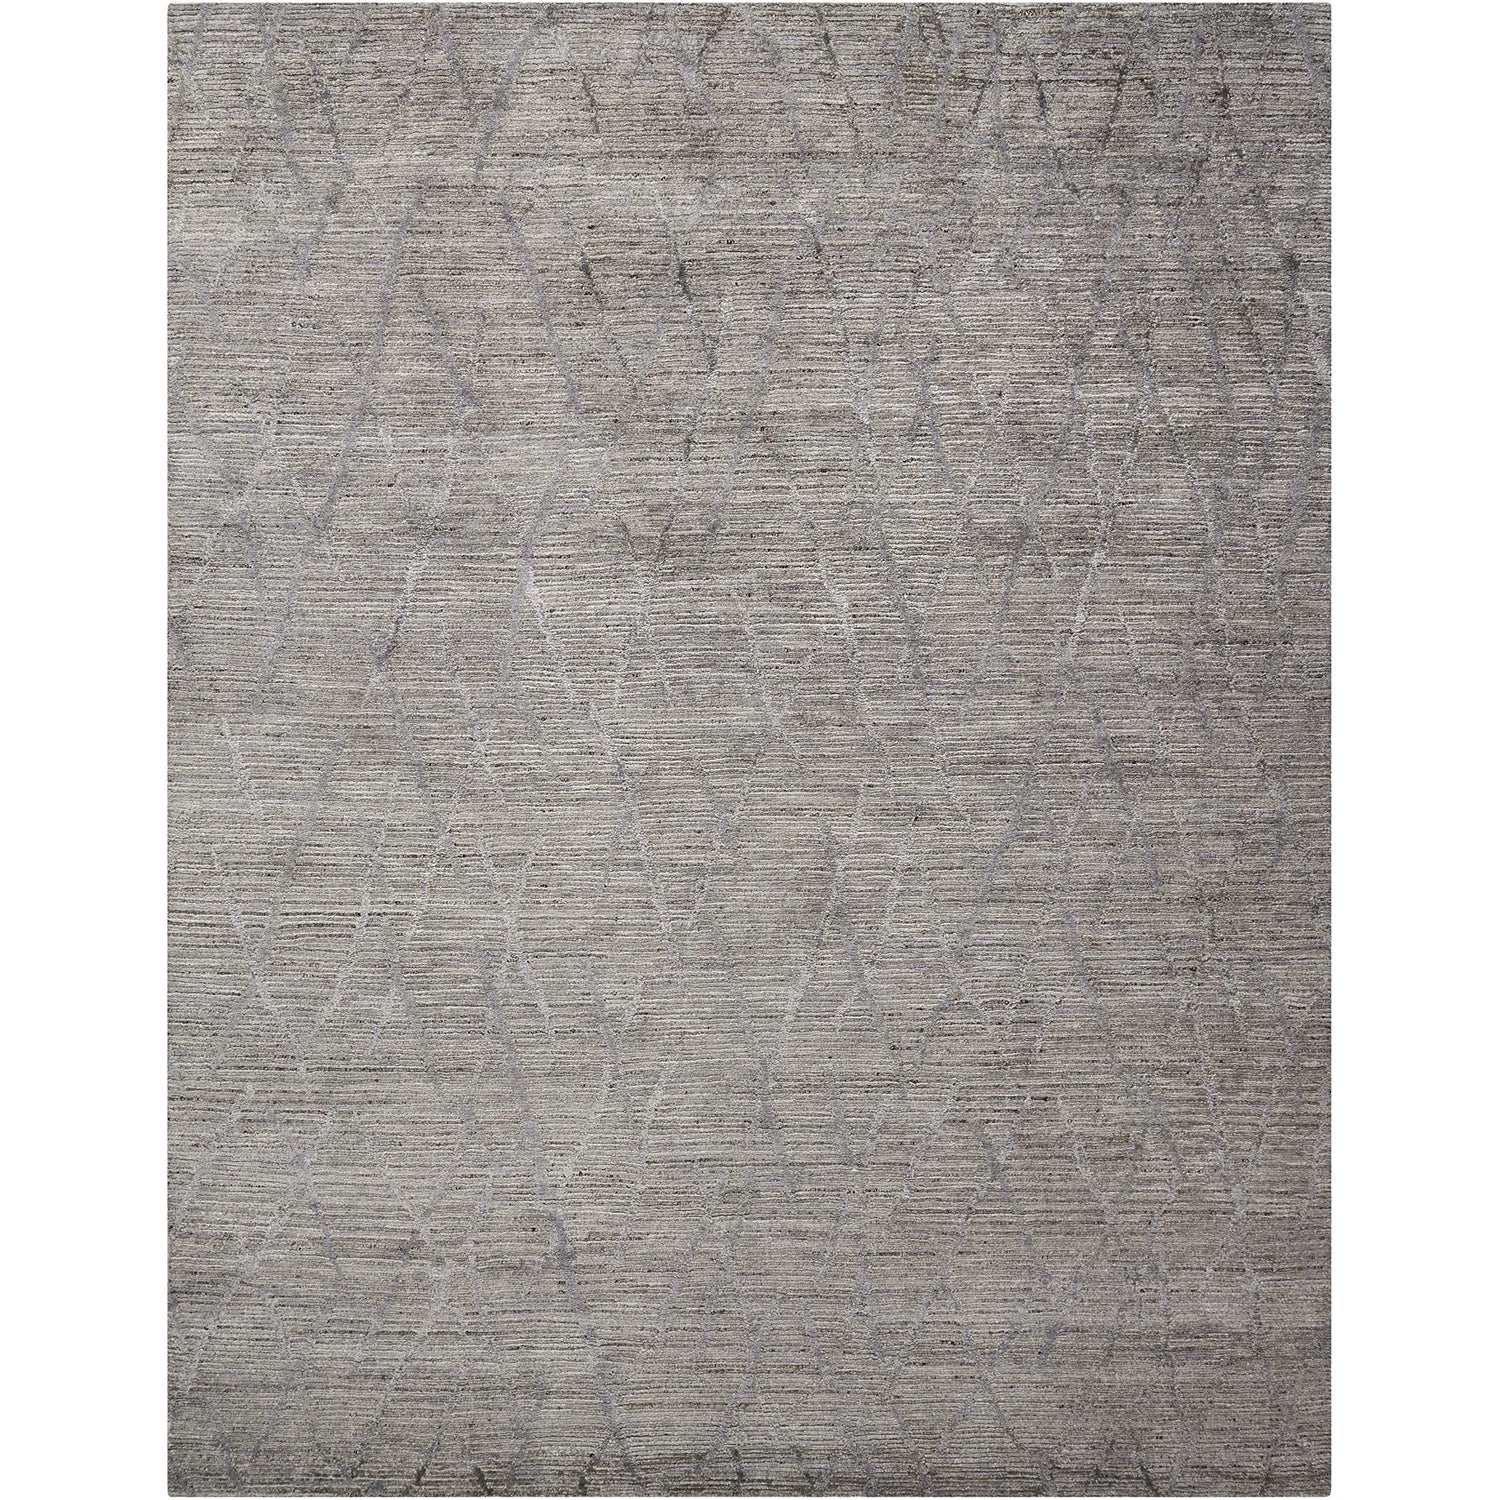 Modern, neutral-tone rug with subtle weathered pattern adds elegant comfort.